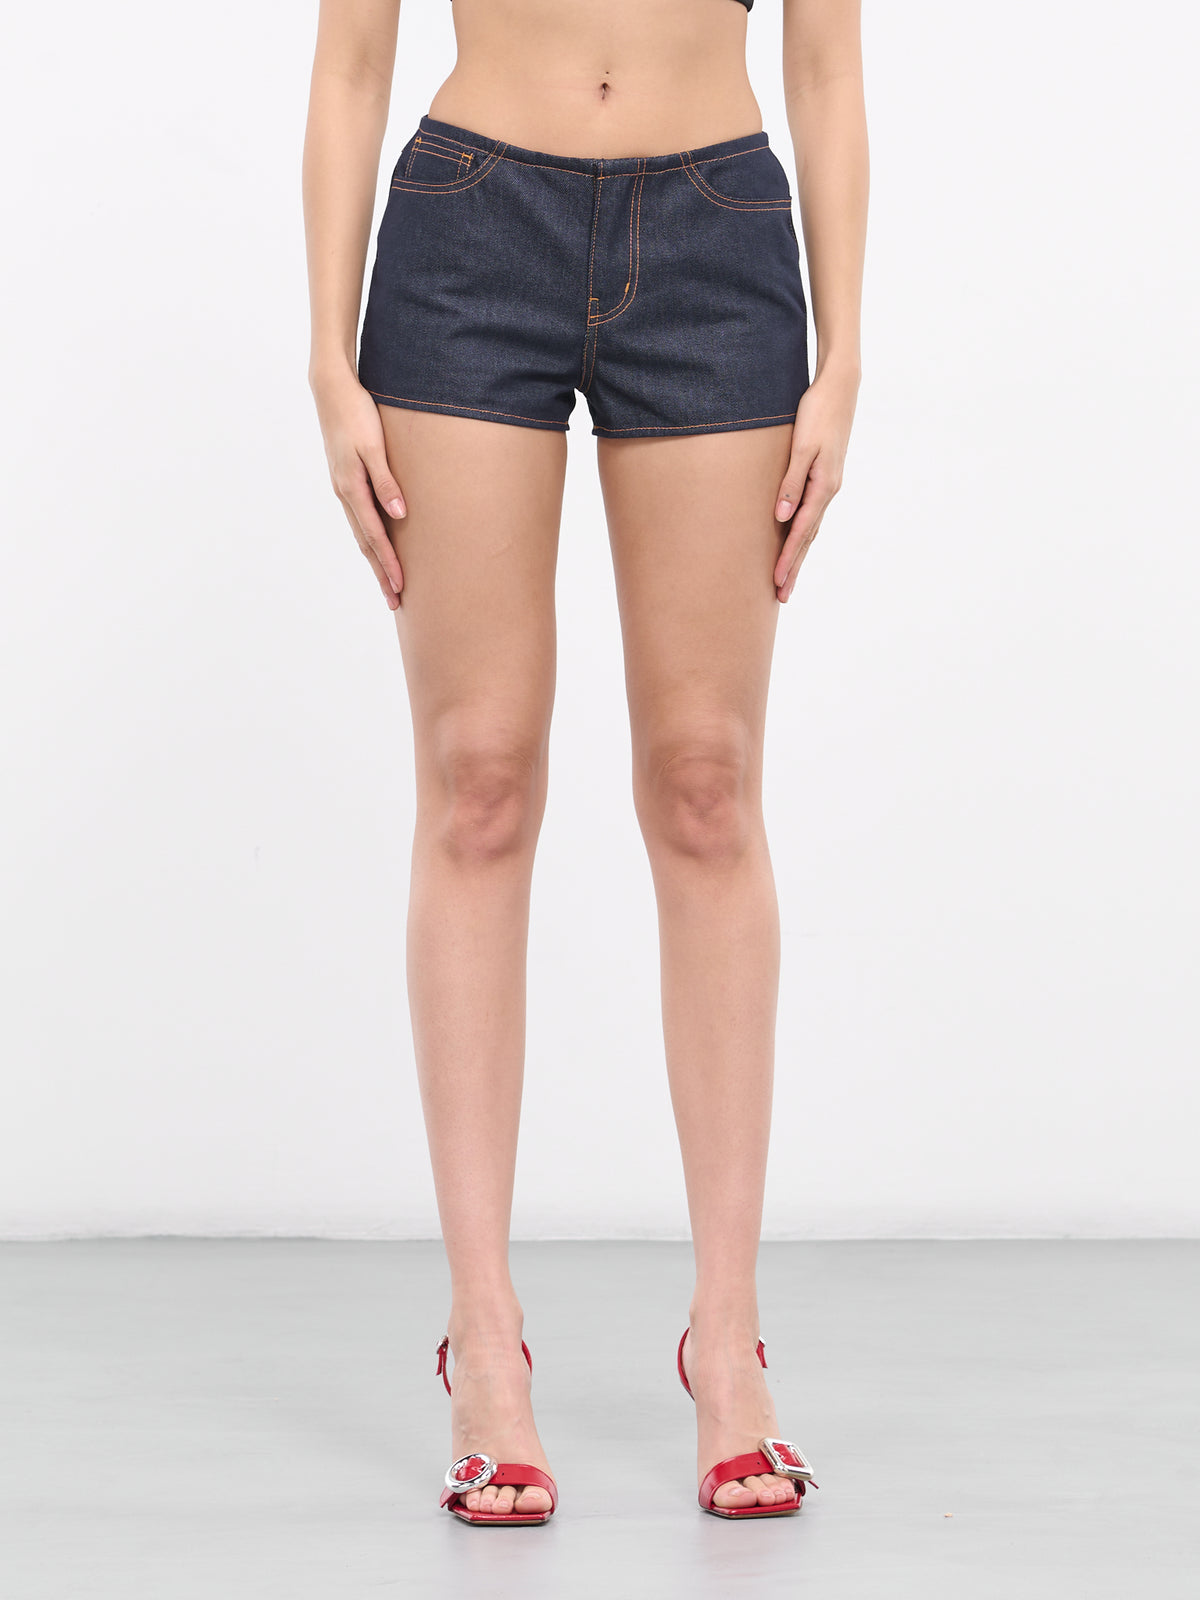 Low-Rise Denim Shorts (DP0-24-343-W-NAVY)